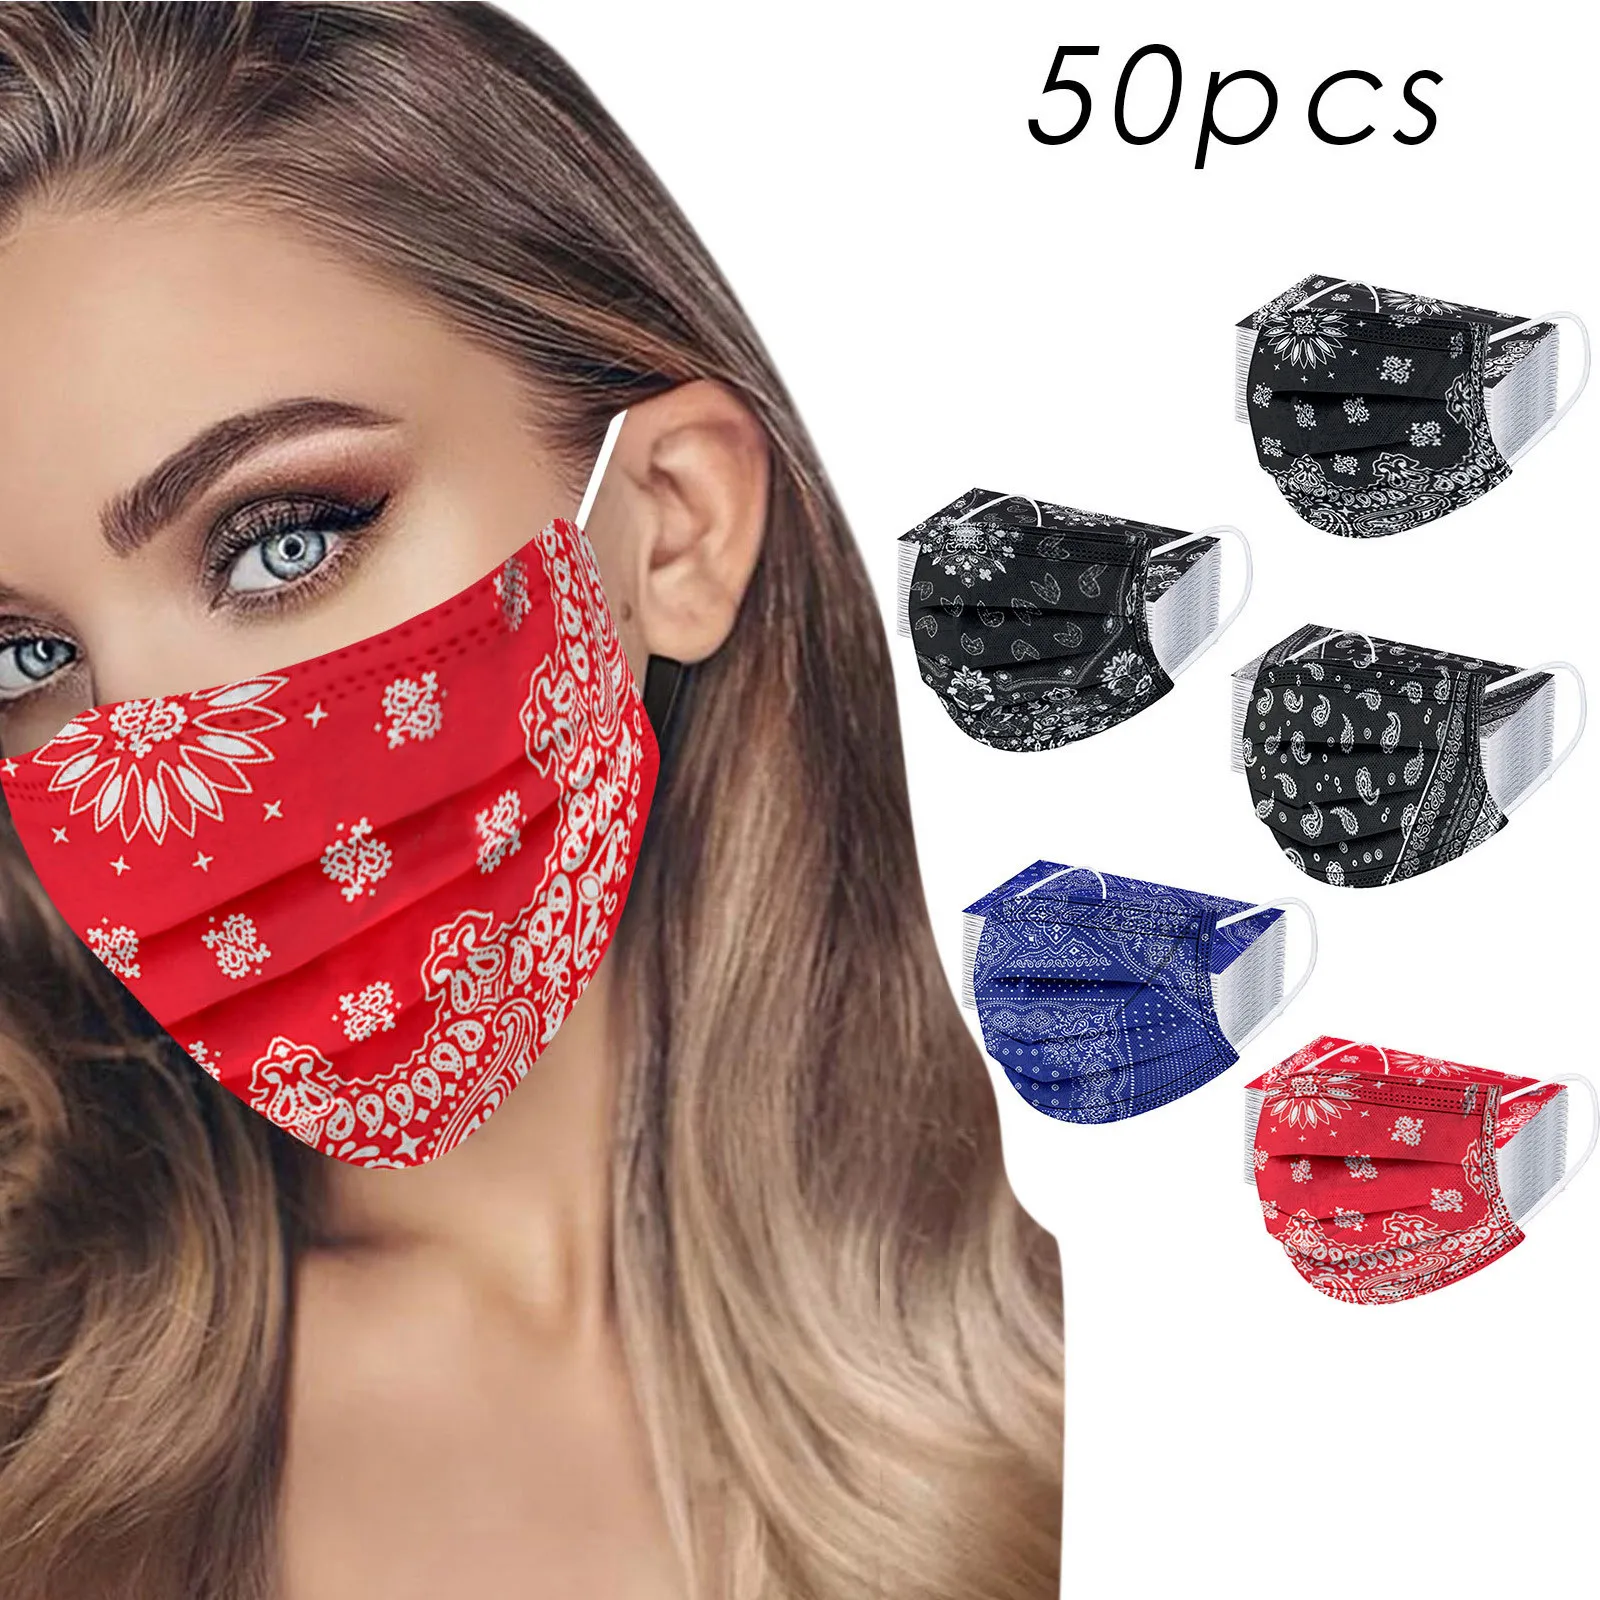 

Headband 50PC mascarillas mascarar Women Men Print Masks Disposable Earloop Mask masque de protection Маска masque бандана#